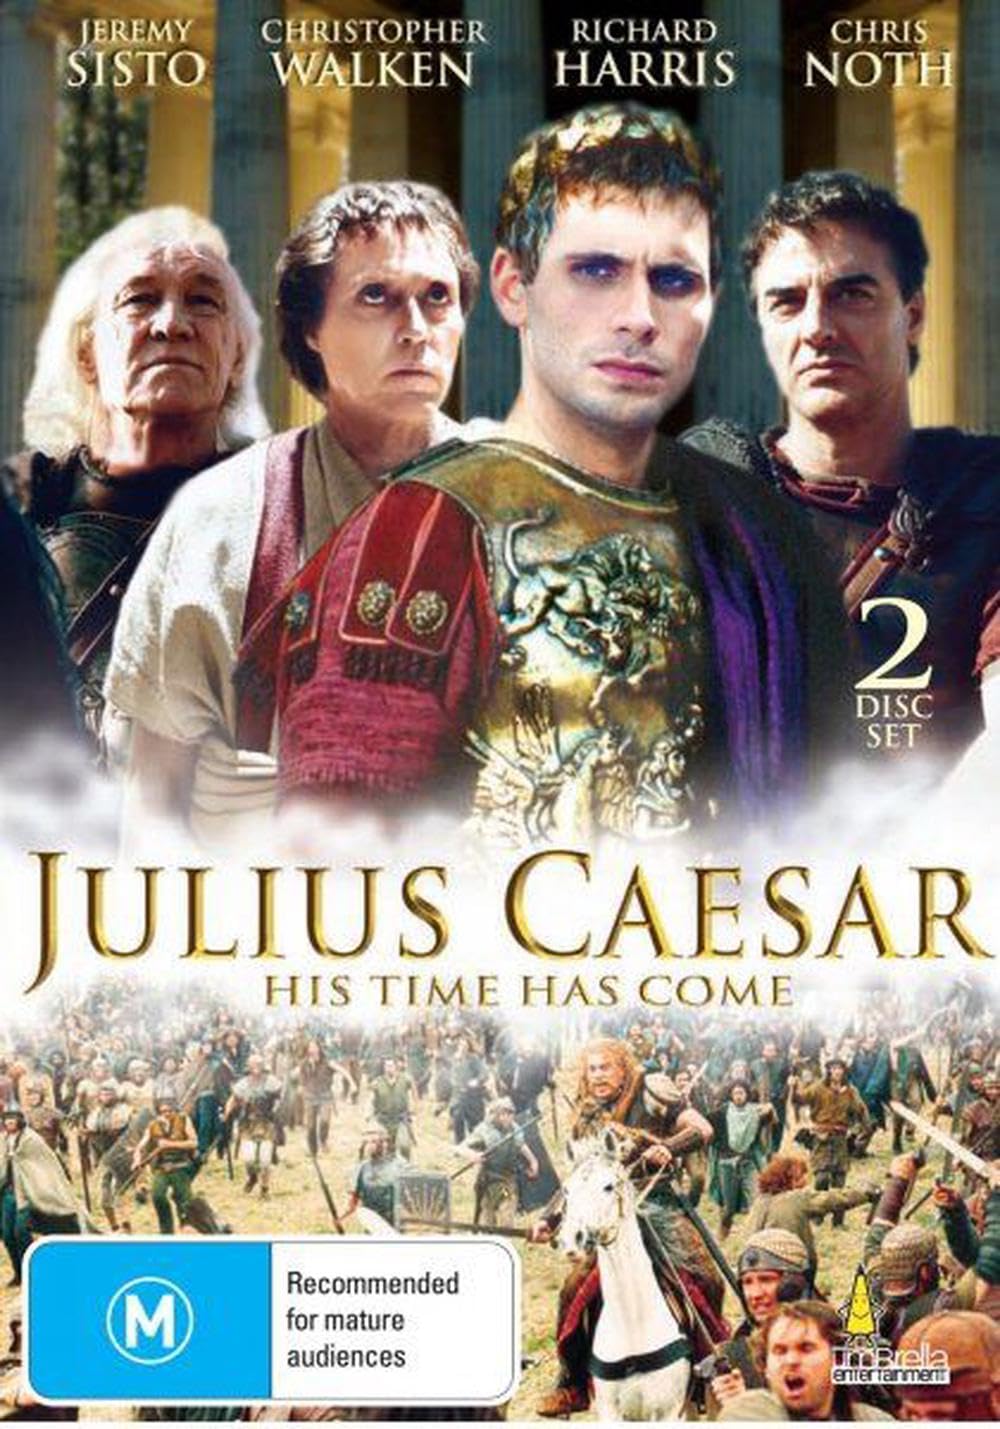 The Making of 'Julius Caesar'